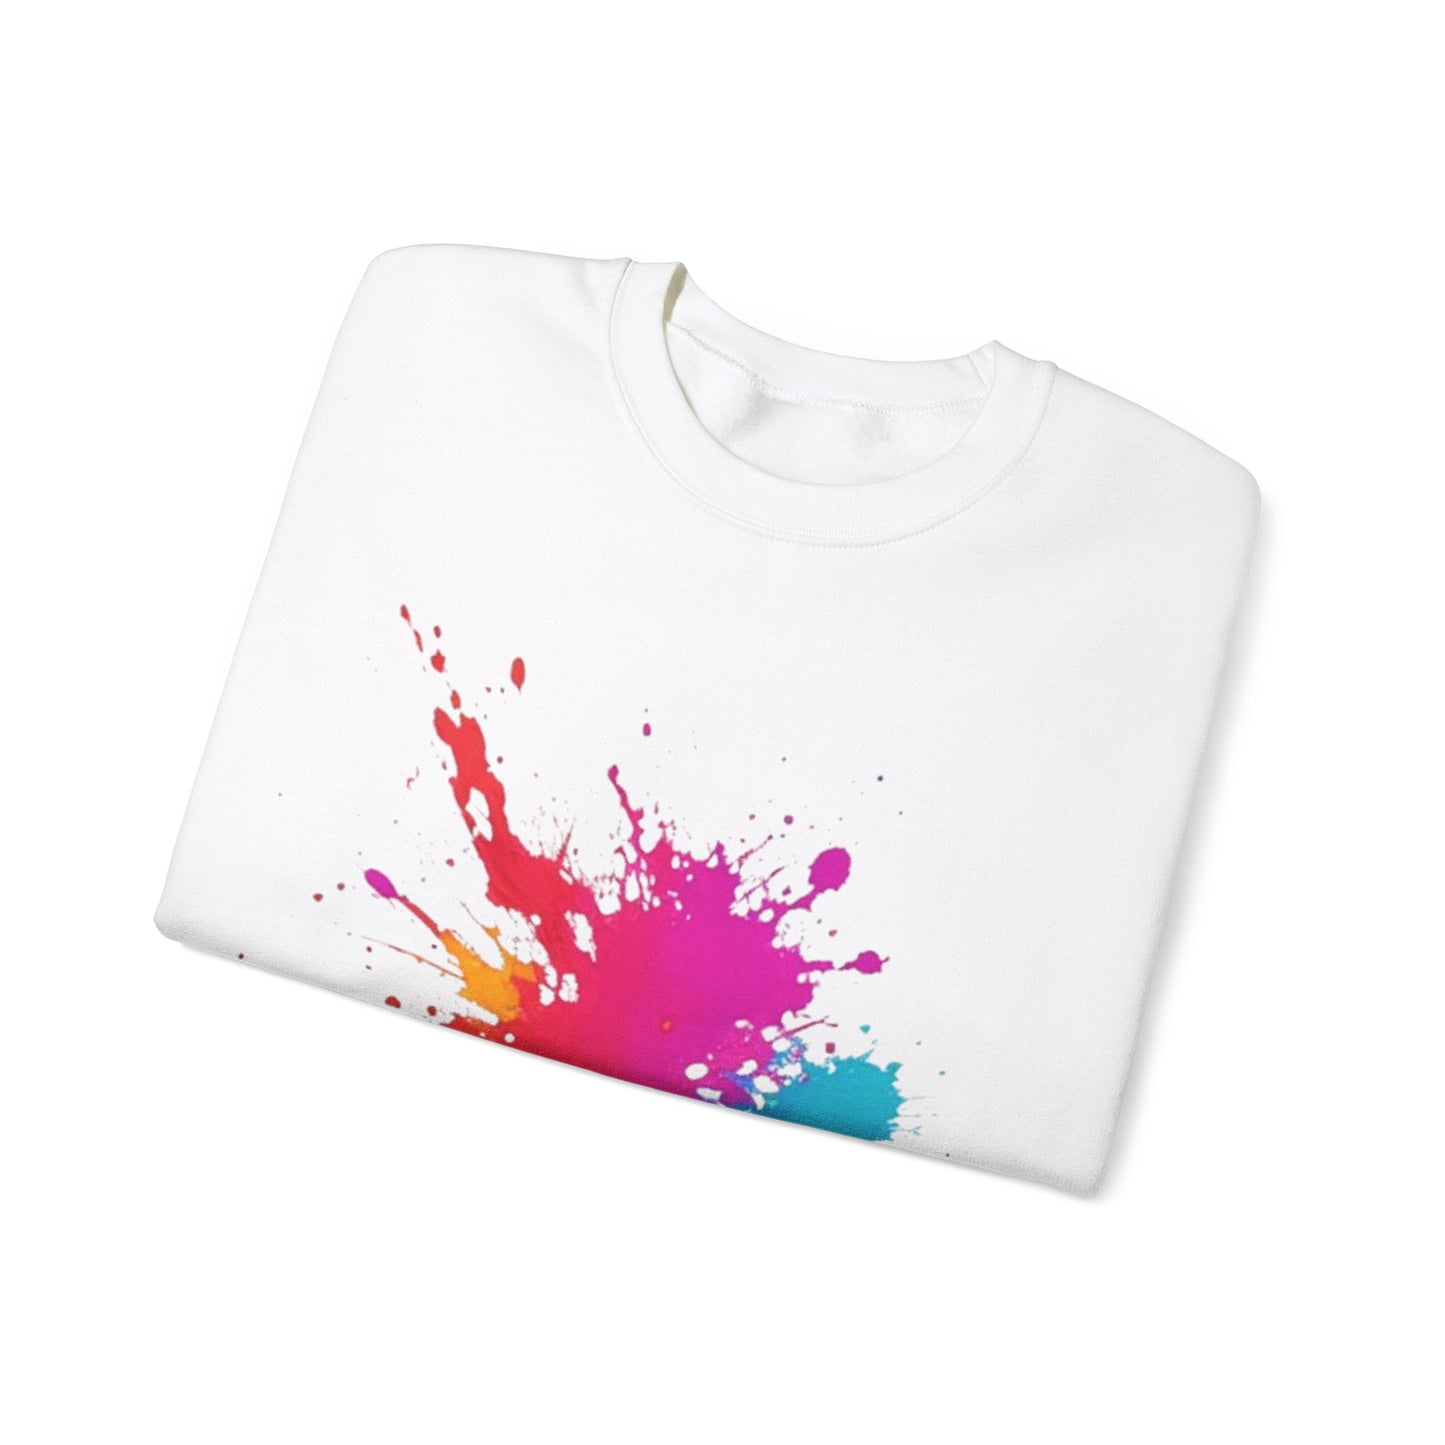 Colourful Splatter Art - Unisex Crewneck Sweatshirt